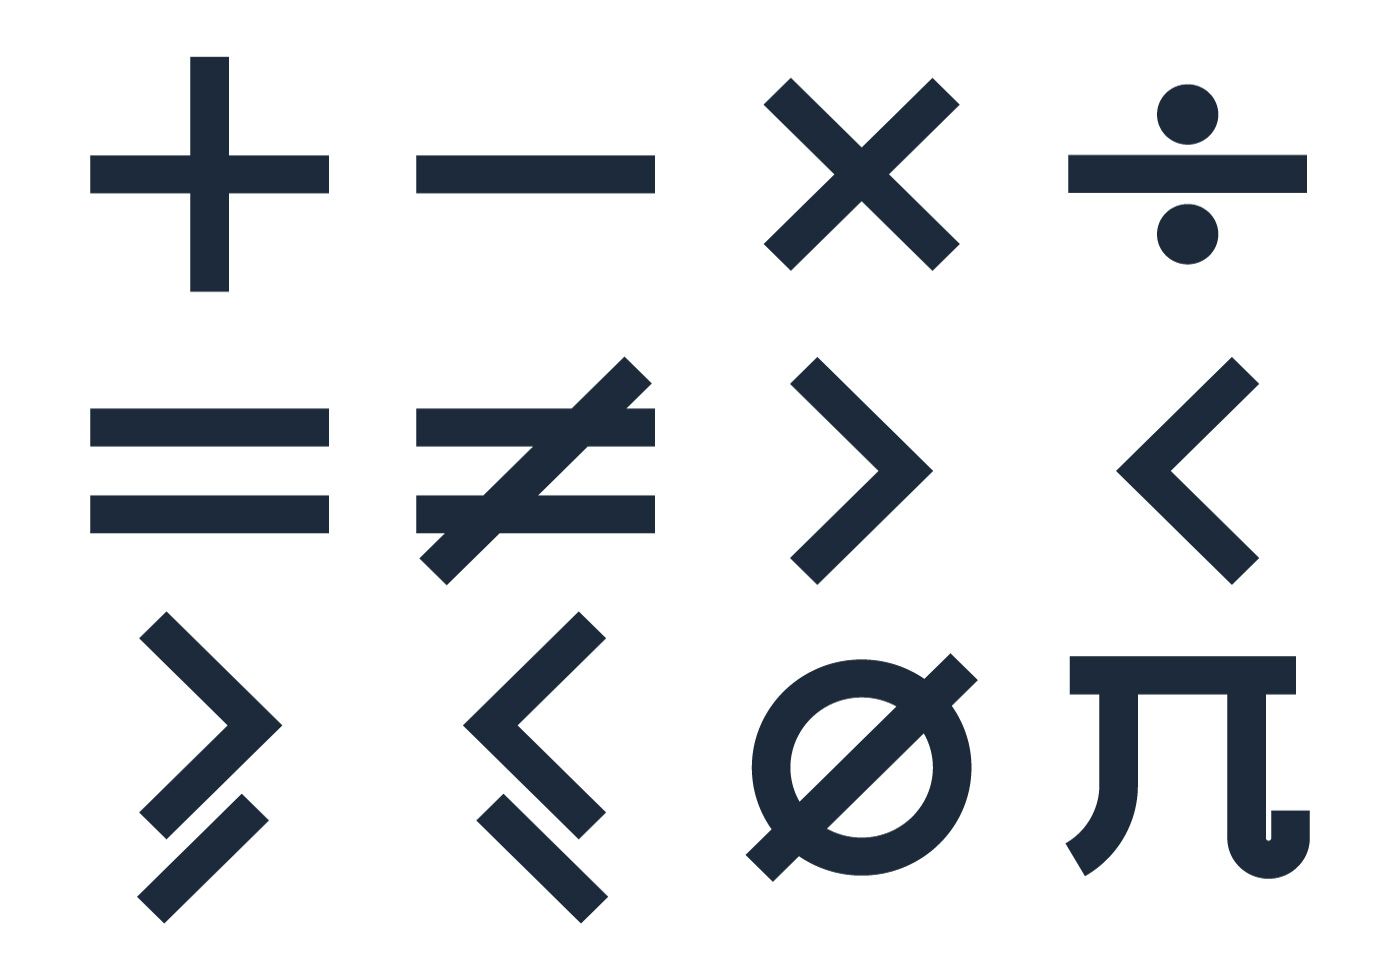 math symbols